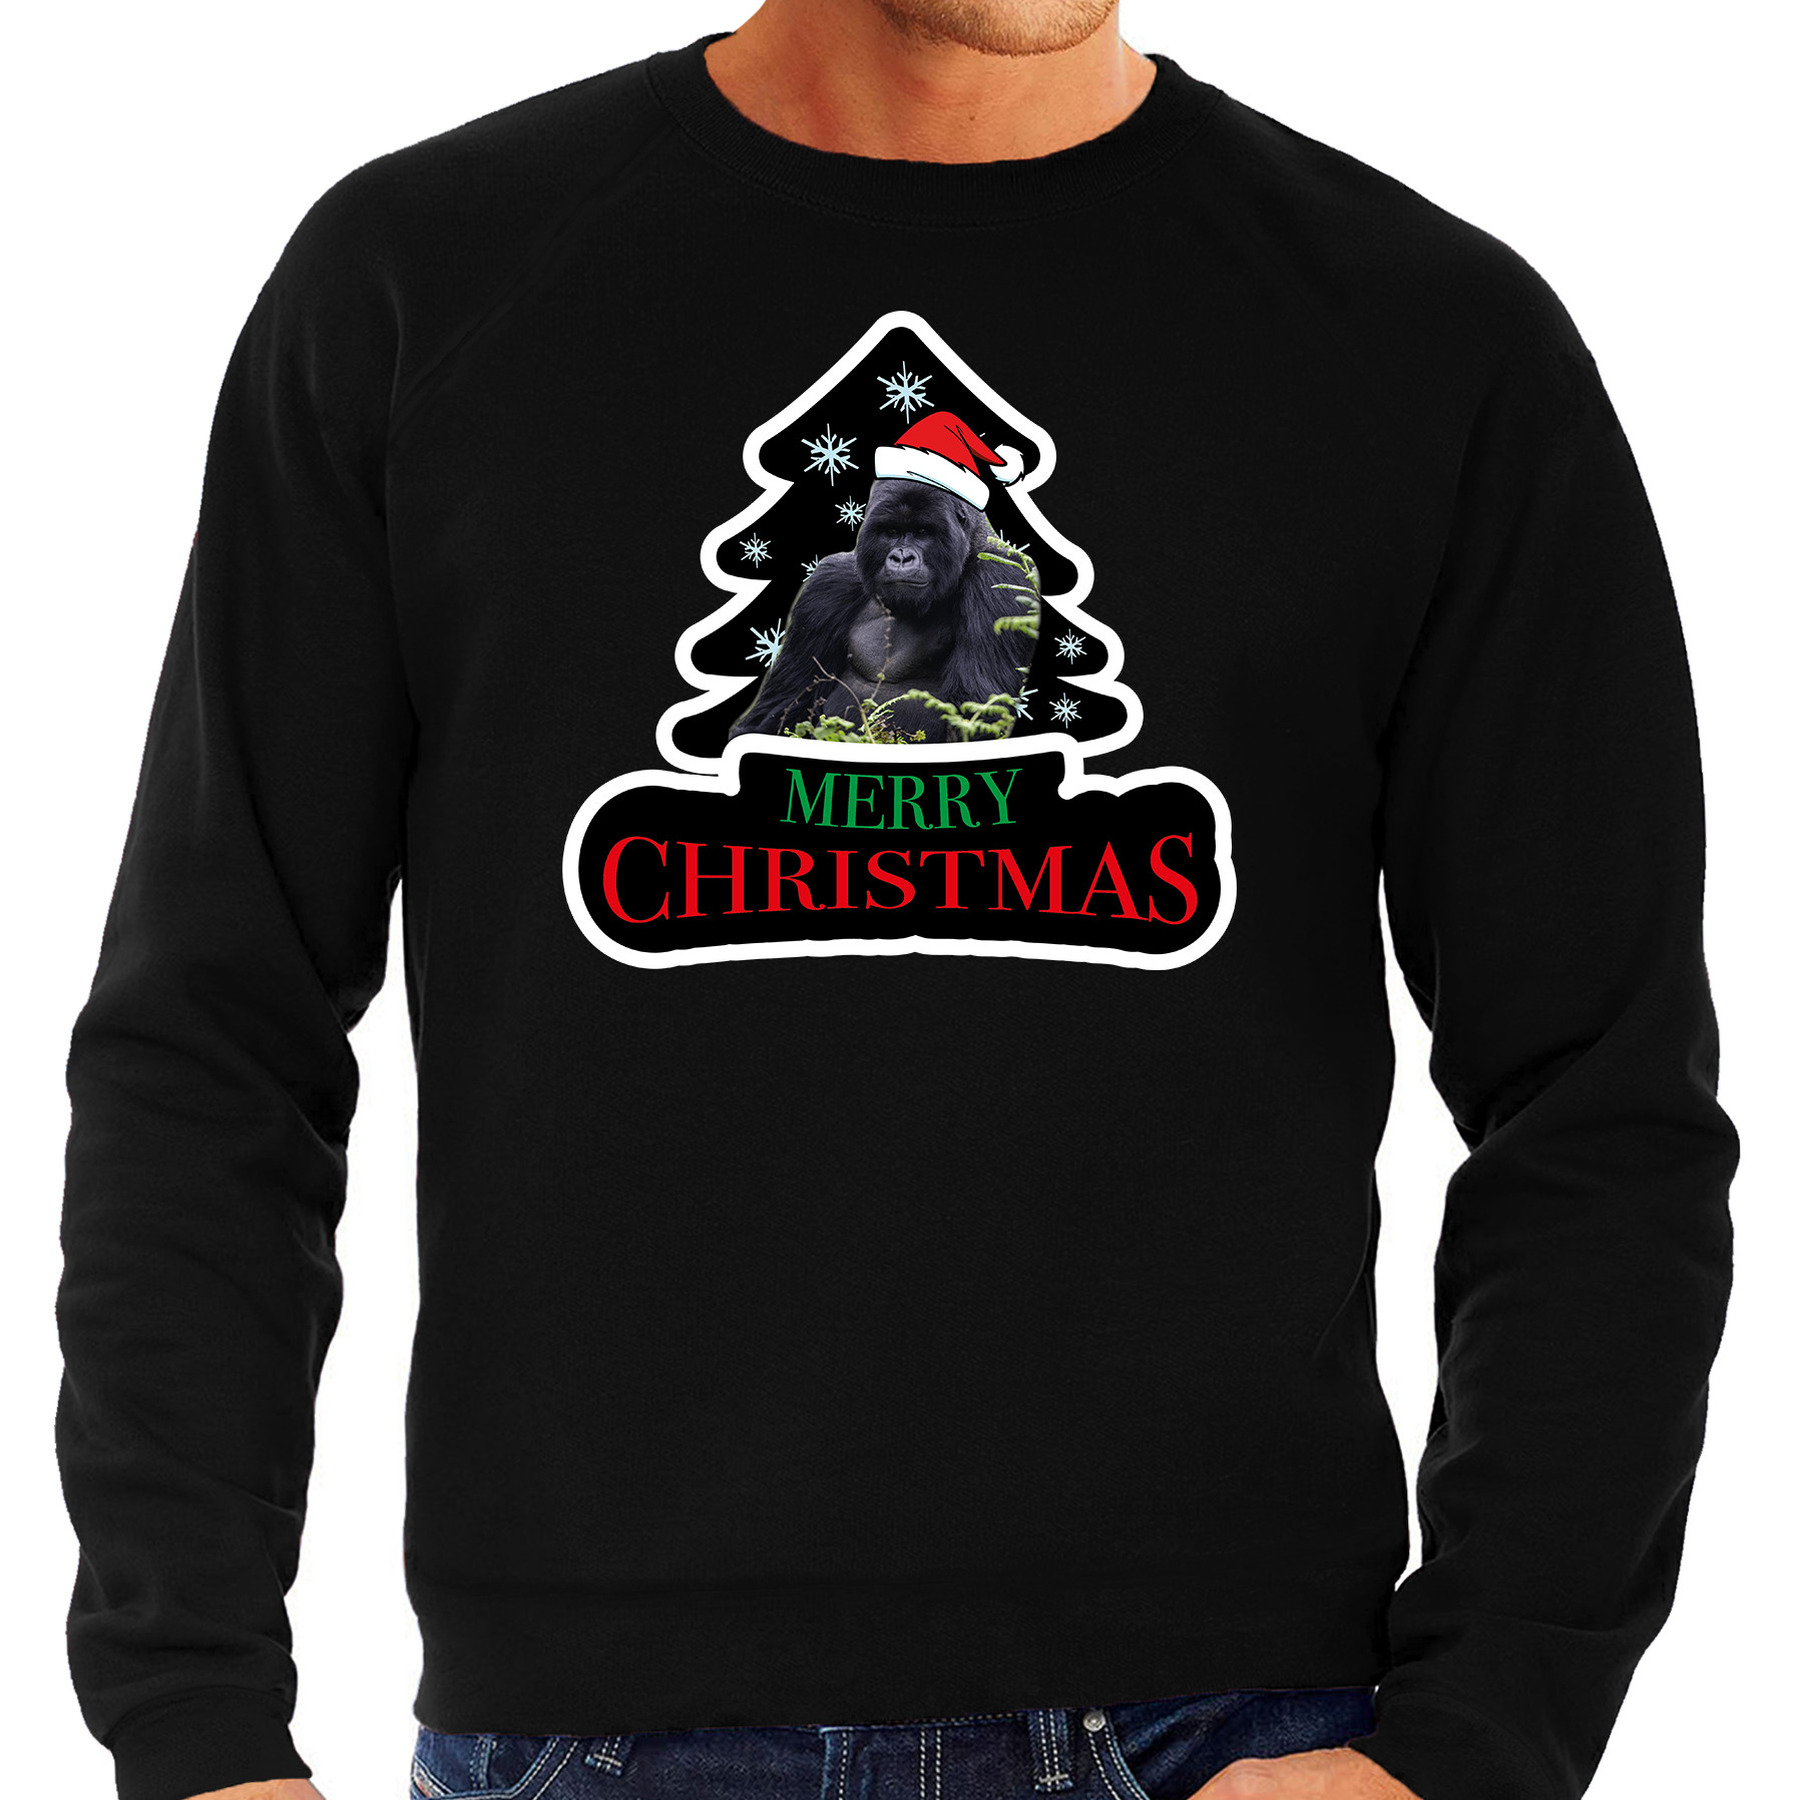 Dieren kersttrui gorilla zwart heren Foute gorilla apen kerstsweater